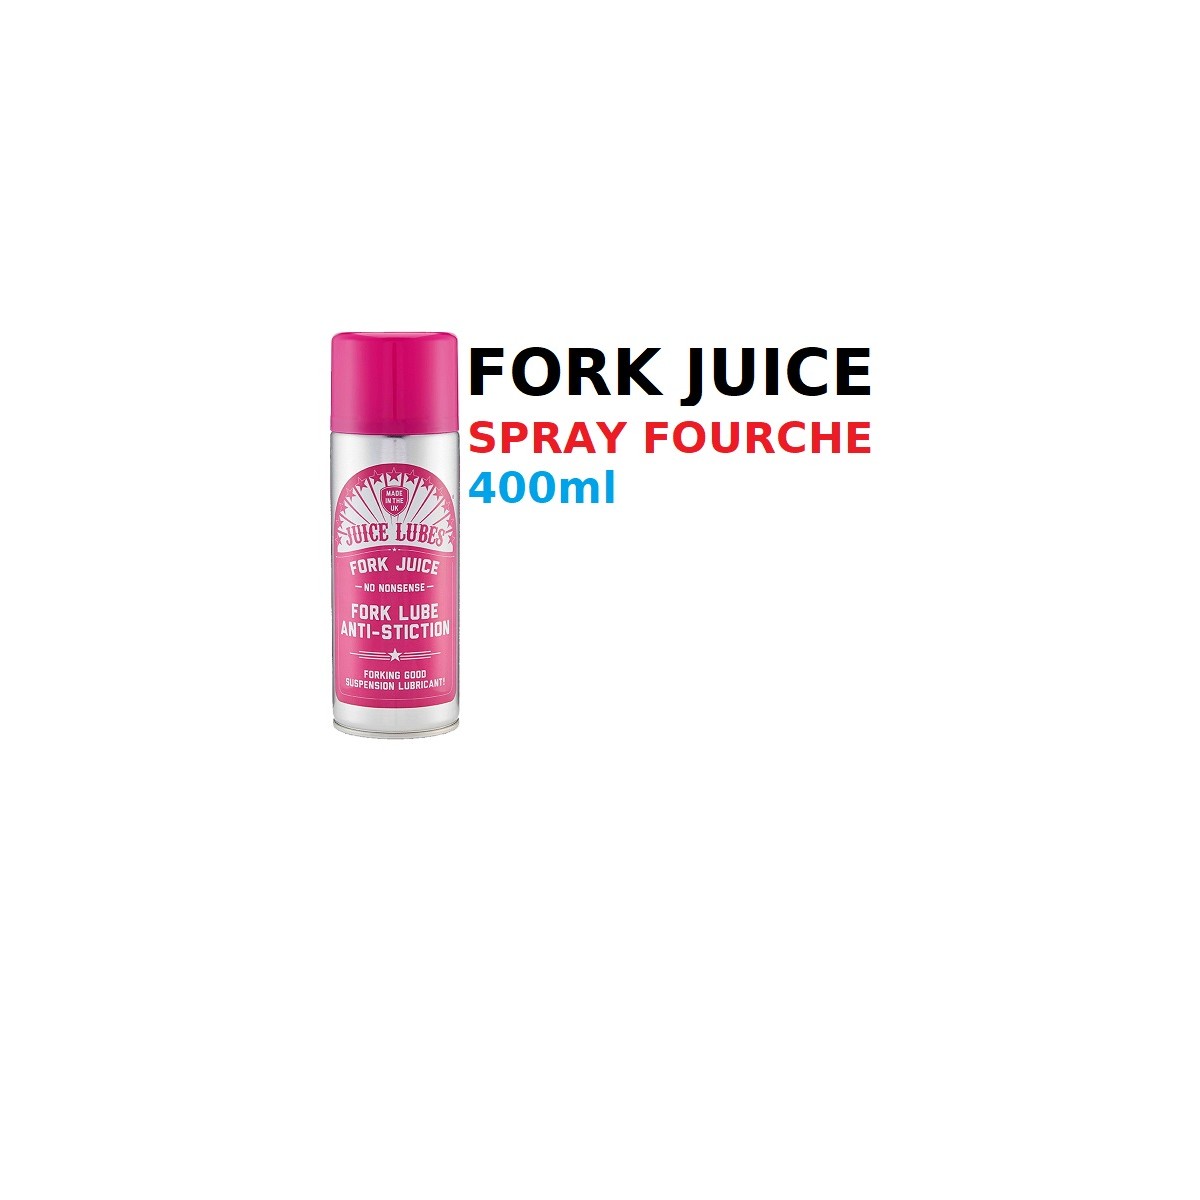 SPRAY FOURCHE - Fork juice - JL-LUB-FORK